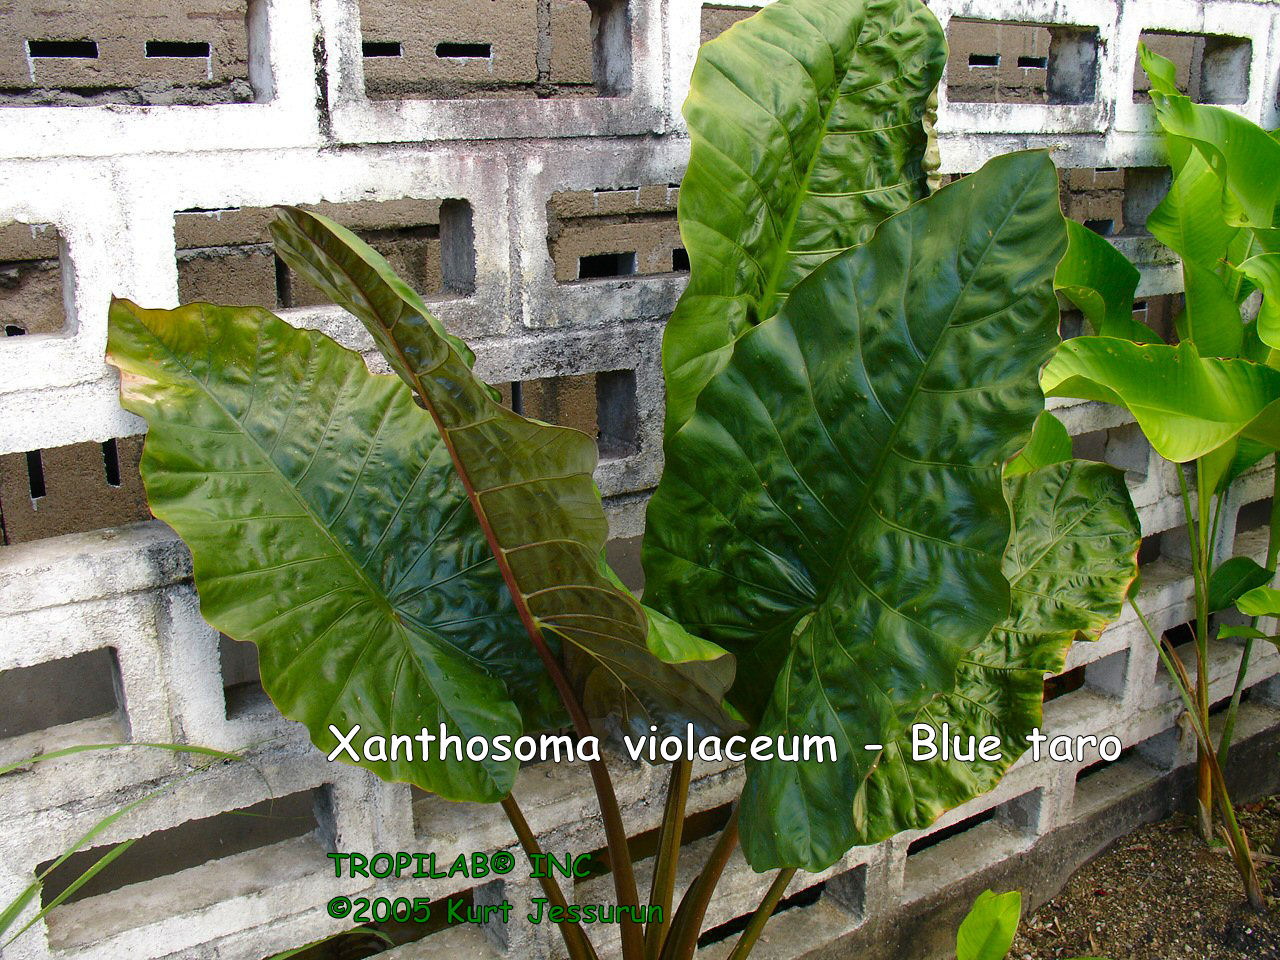 Xanthosoma violaceum - Blue taro